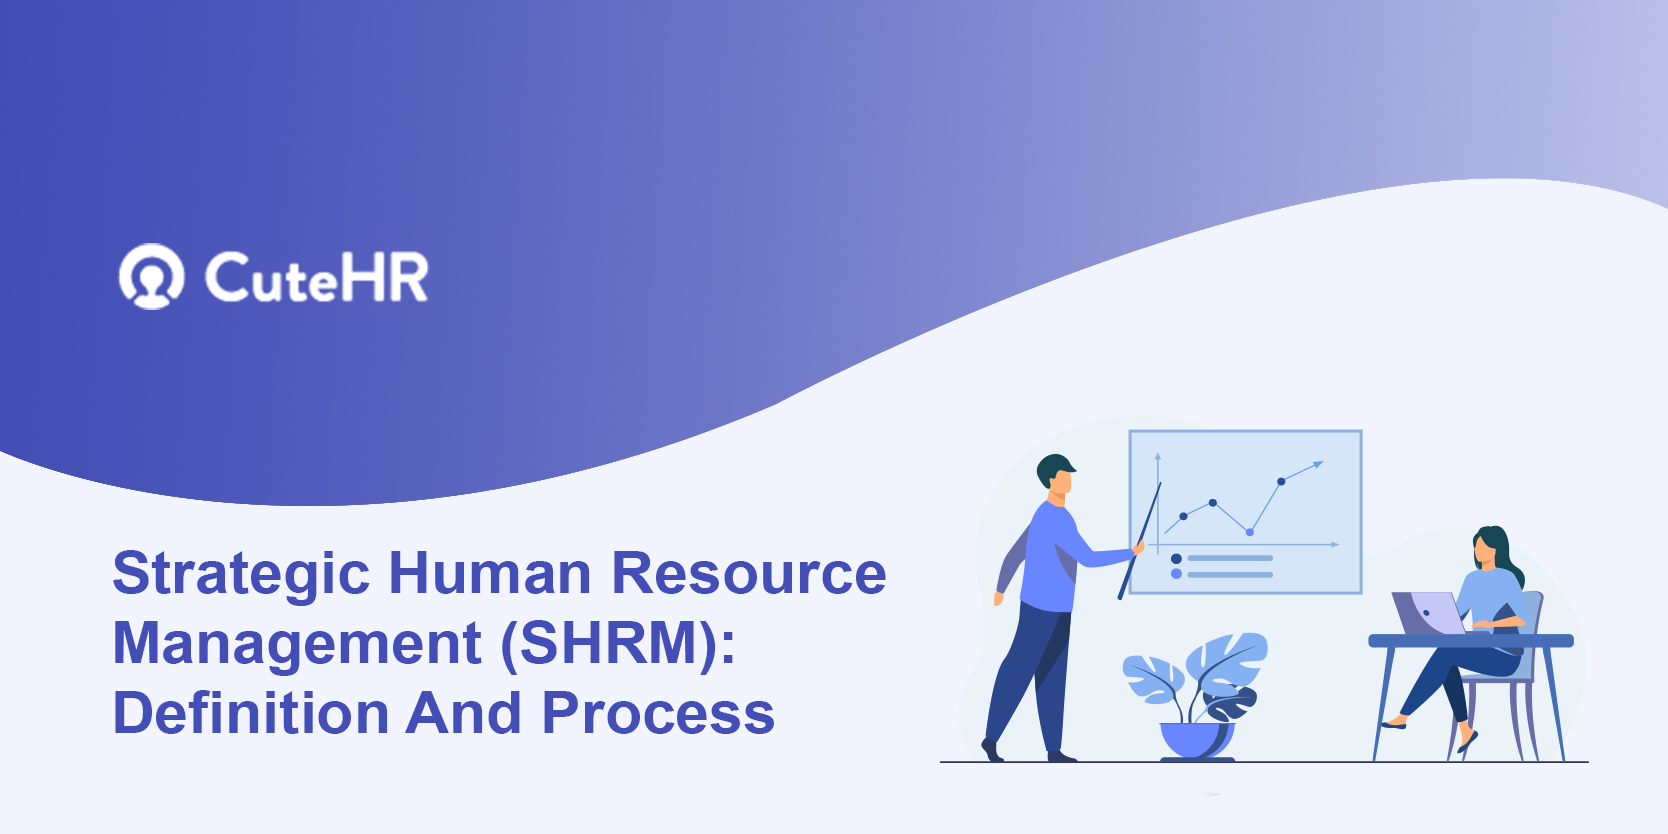 Strategic Human Resource Management (SHRM): What Is It?